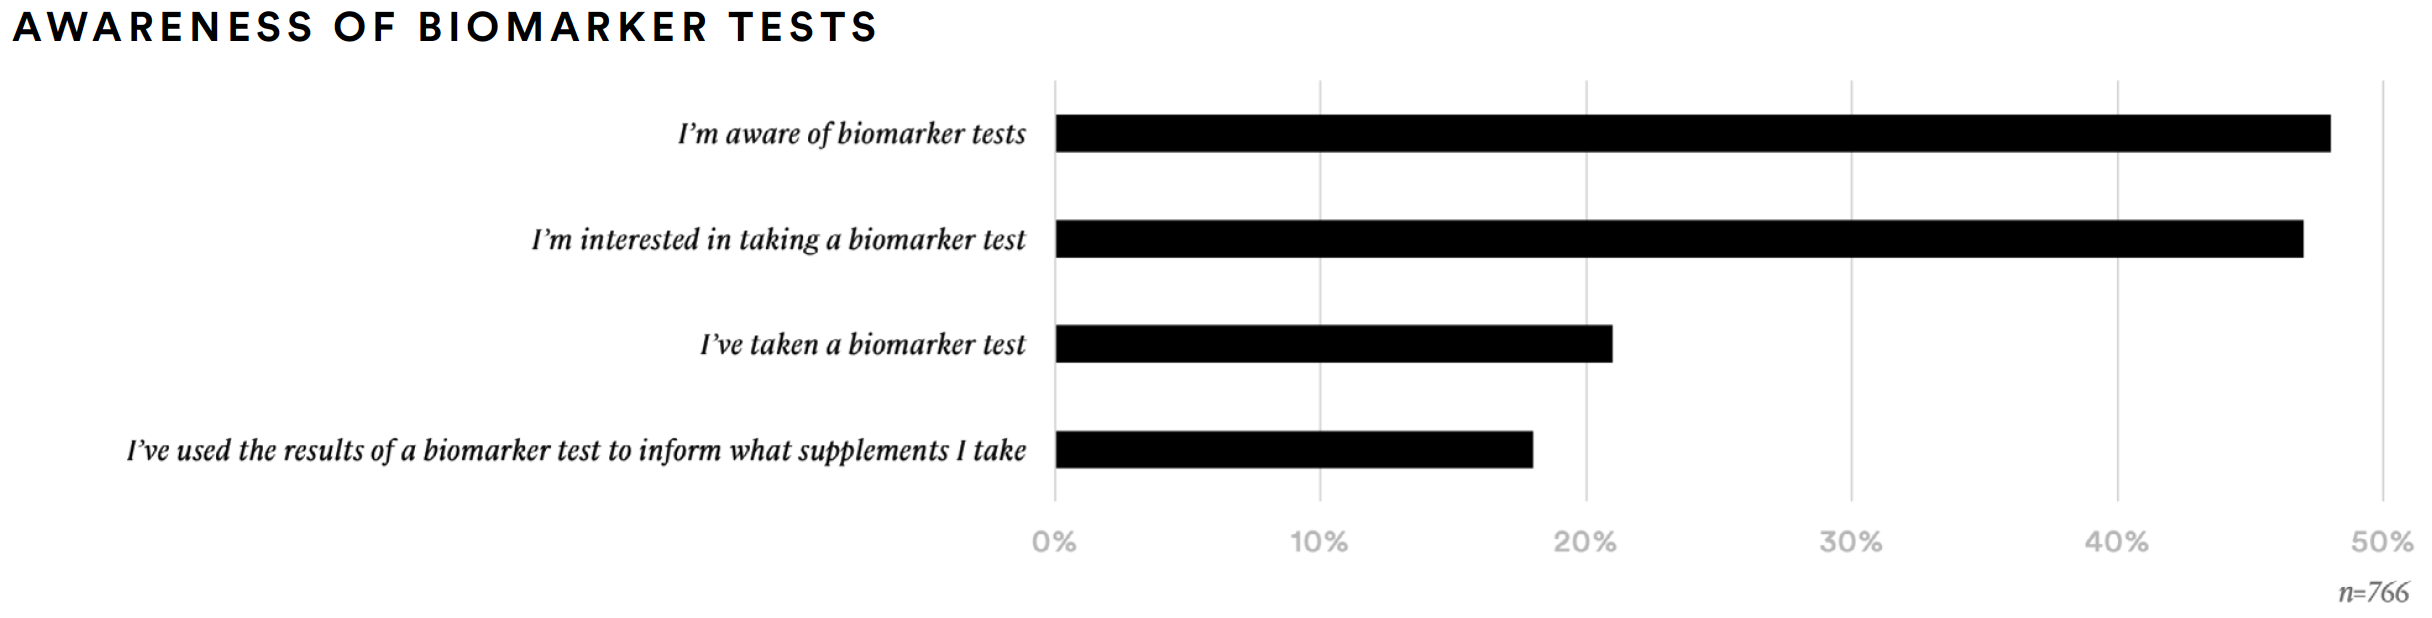 awareness of biomarker tests table